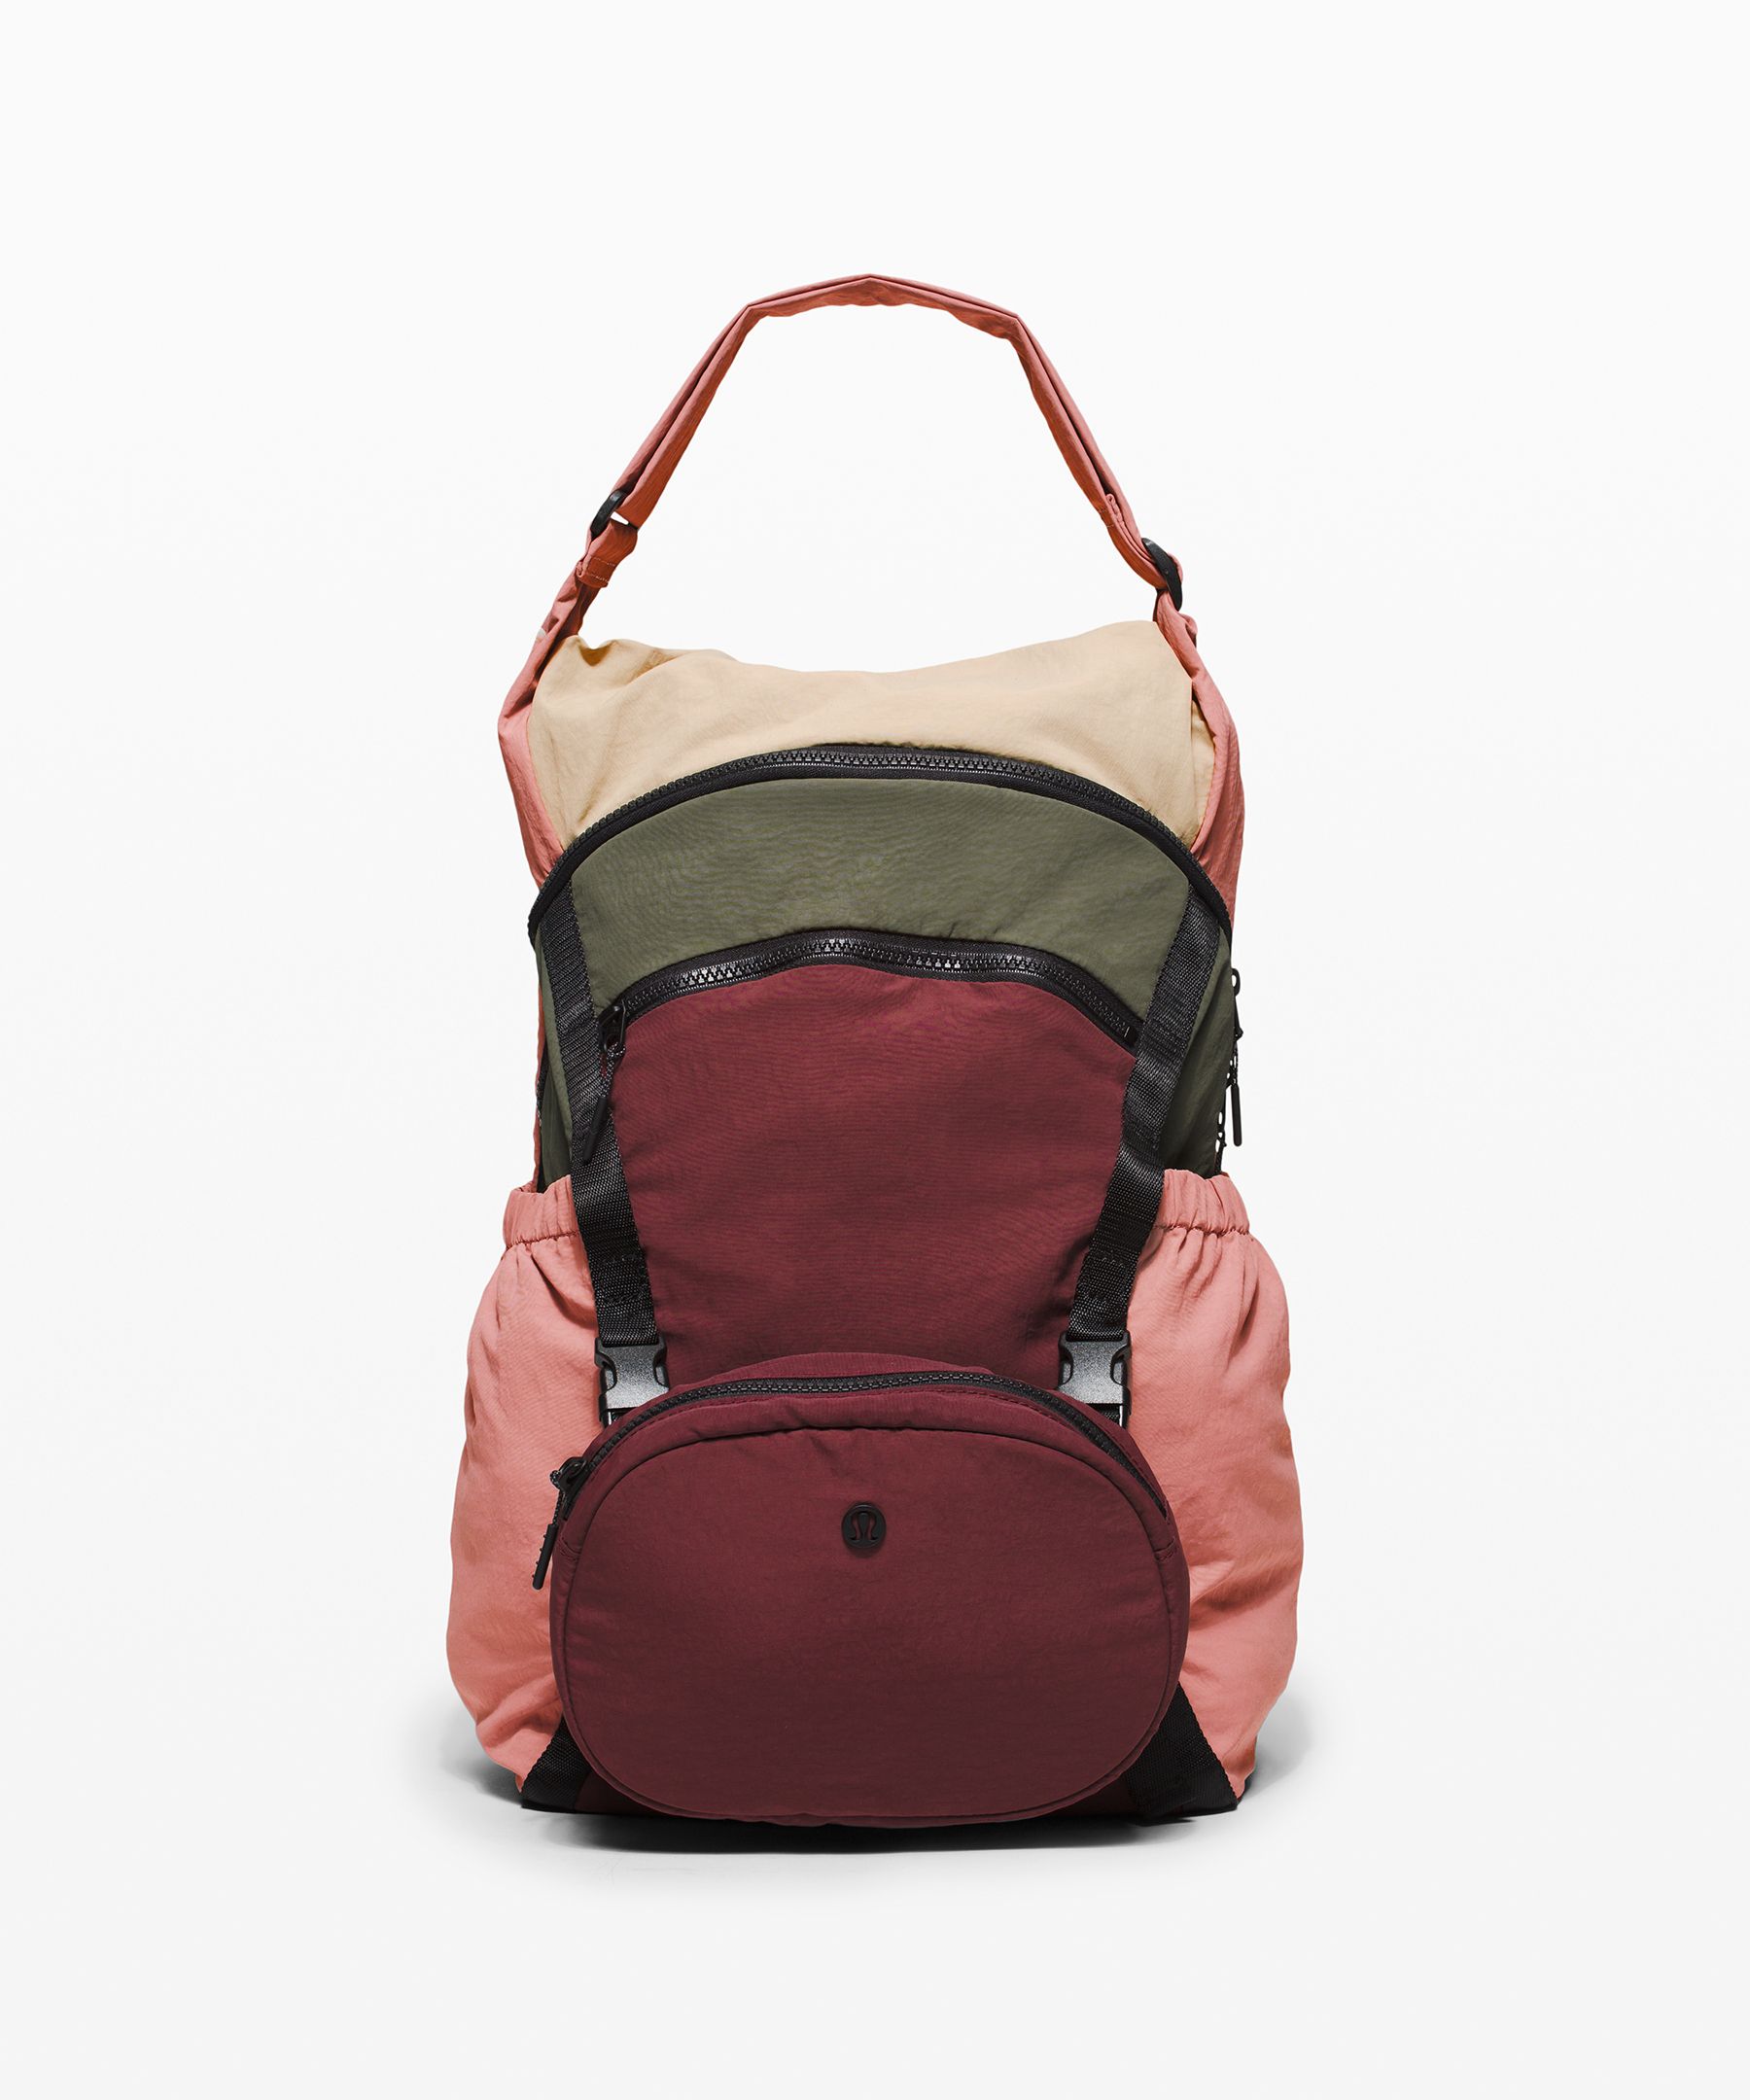 lululemon backpack uk